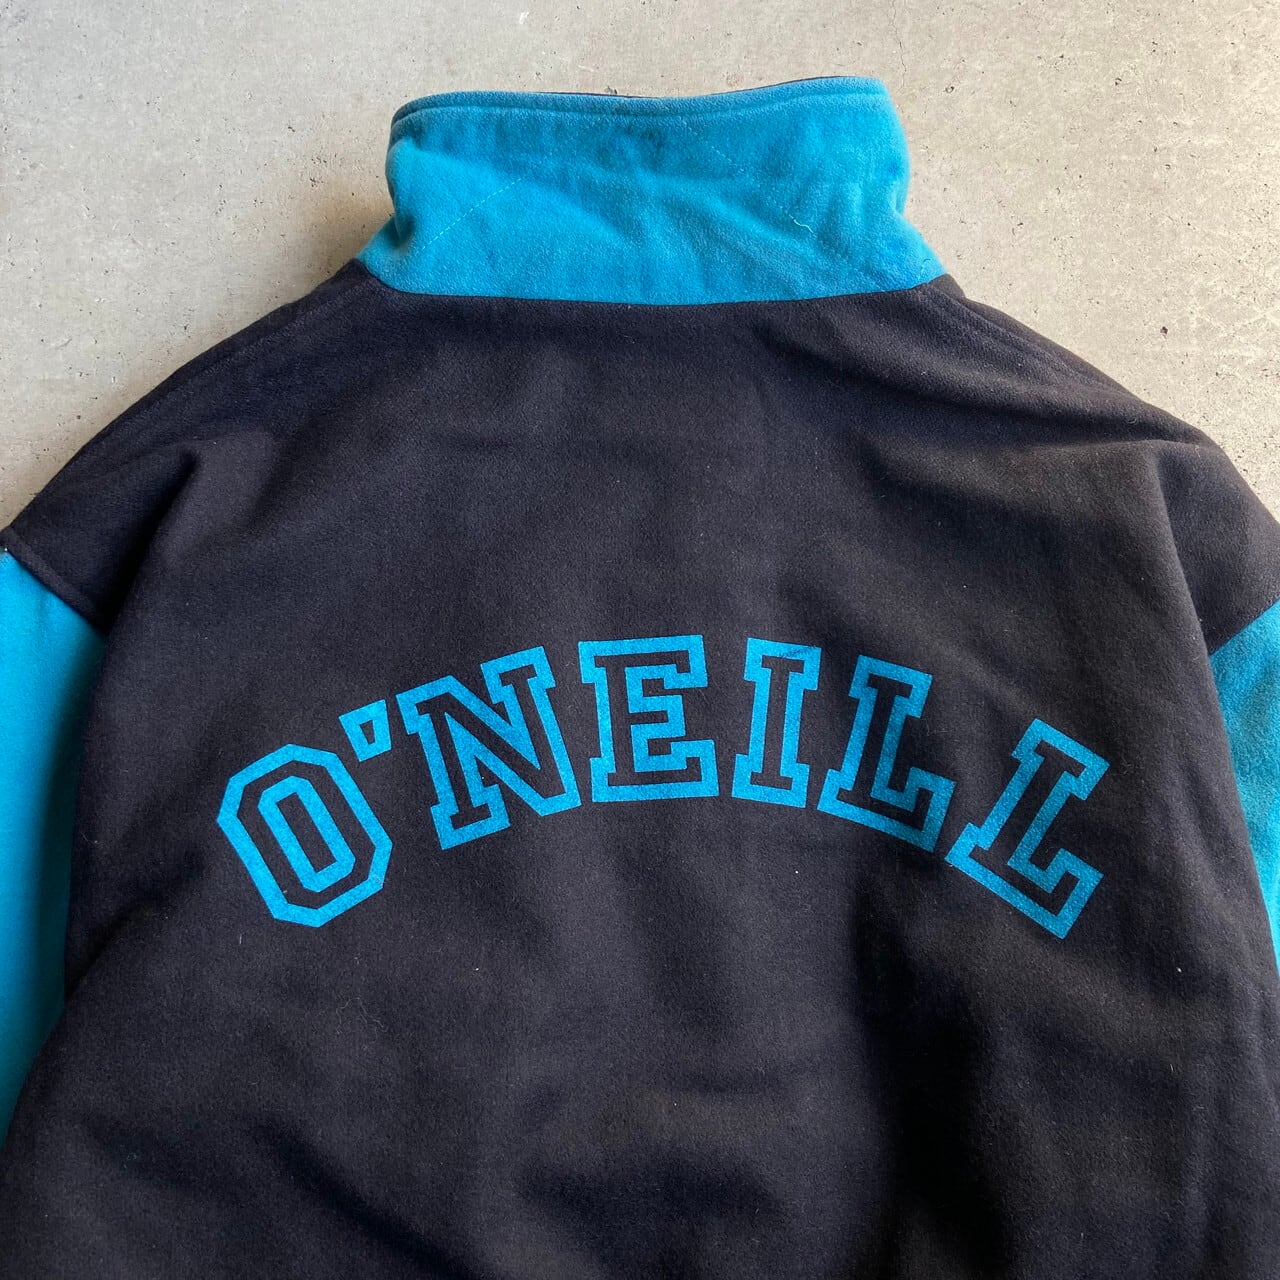 old oneill side line jacket 90's vintage